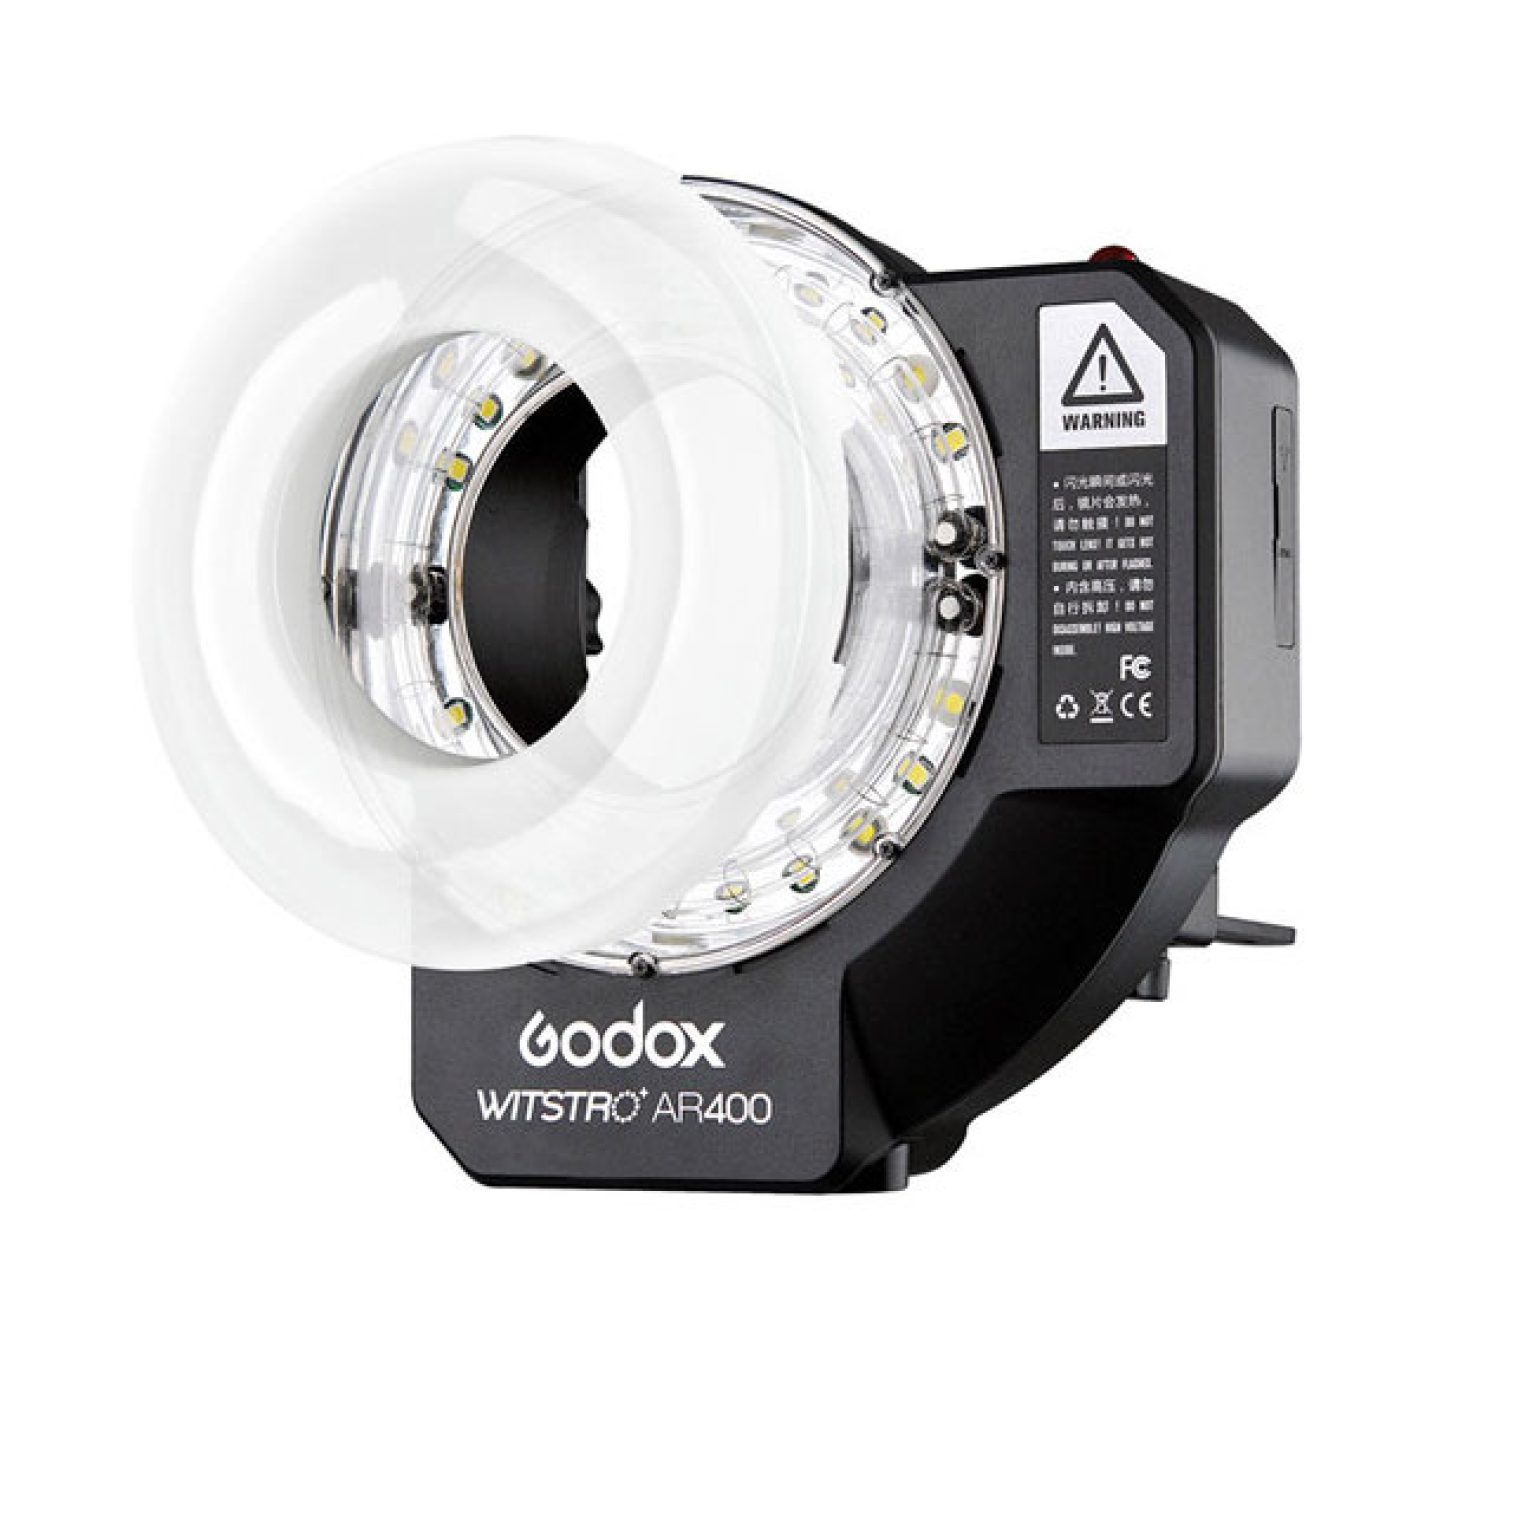 Godox Witstro Ring Flash AR4003